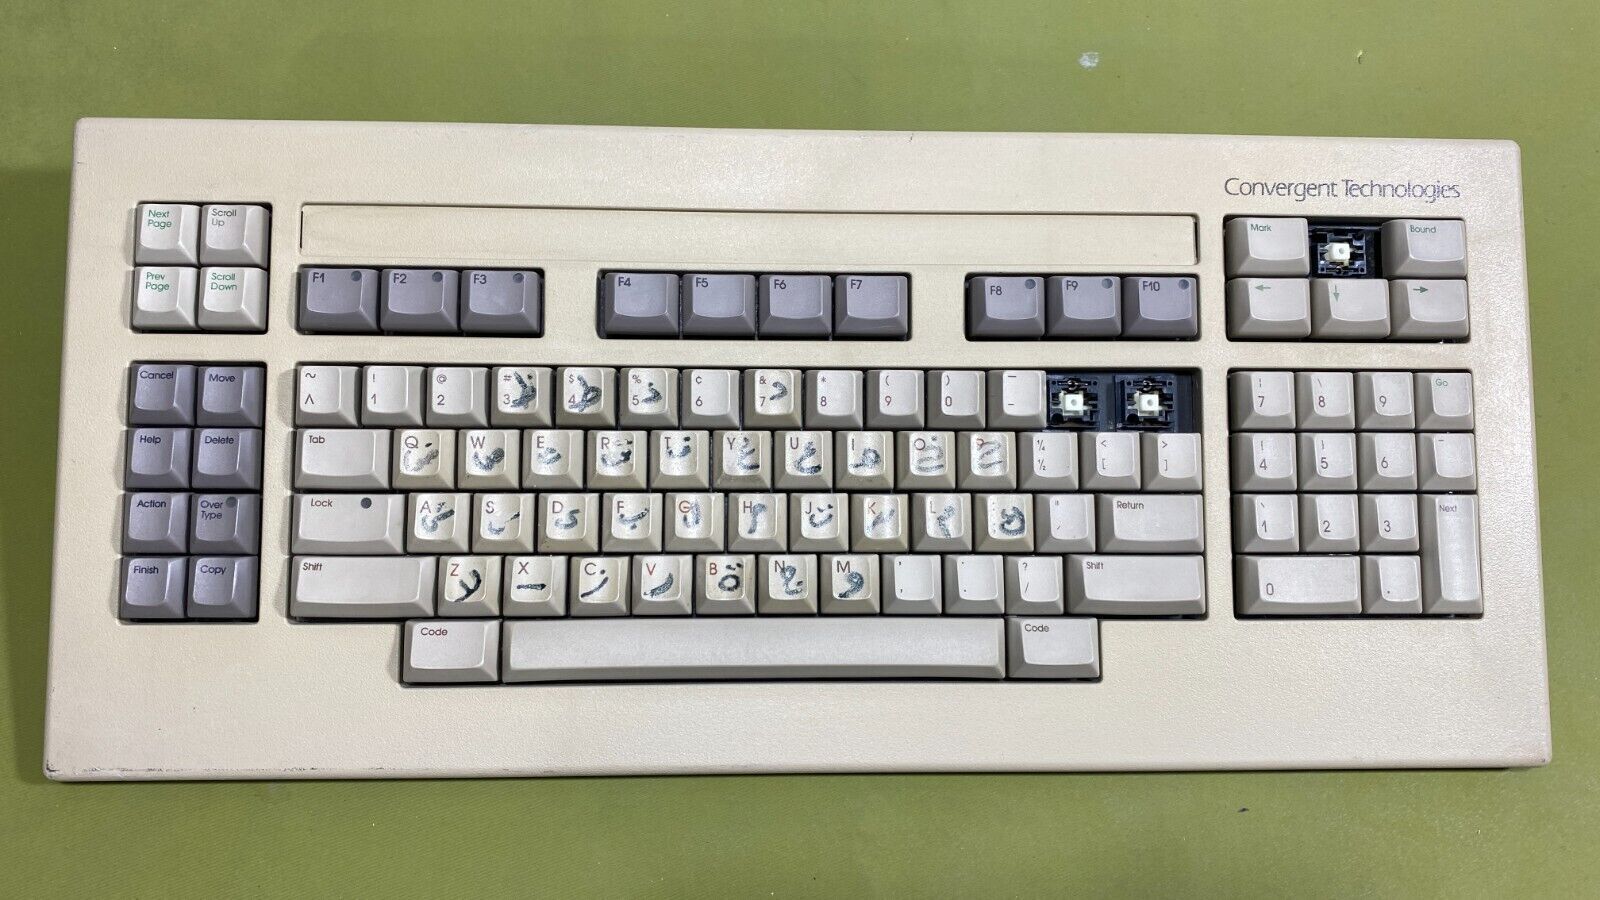 VINTAGE Convergent technologies Miniframe Keyboard KM-001 AB Rare USA 1986